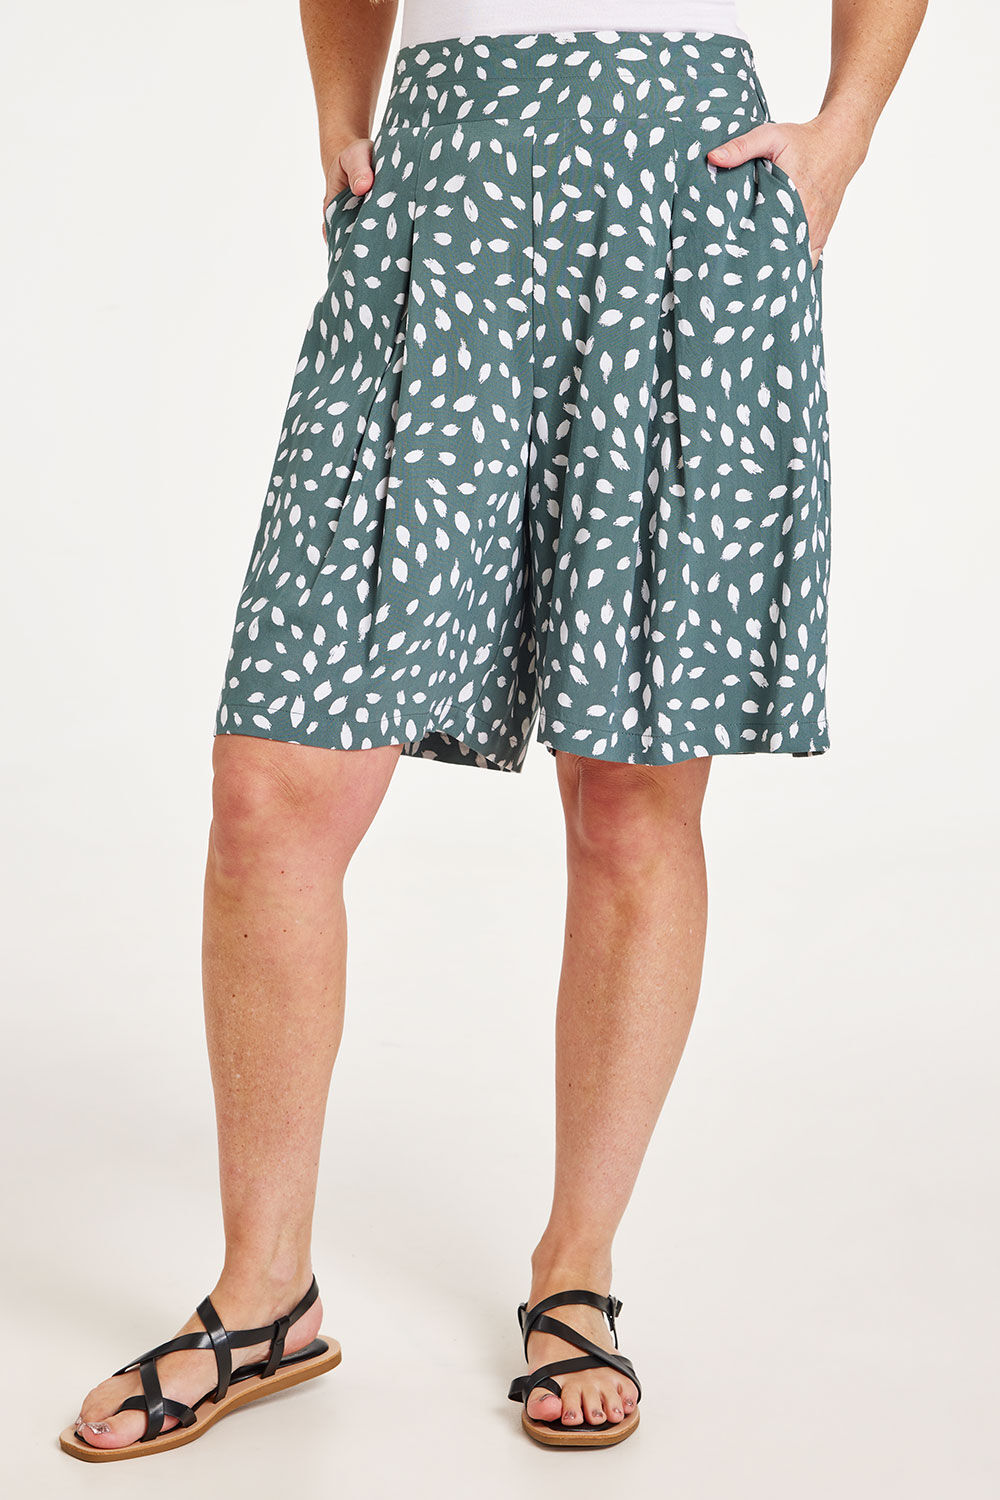 Bonmarche Khaki Spot Print Elasticated Shorts, Size: 28